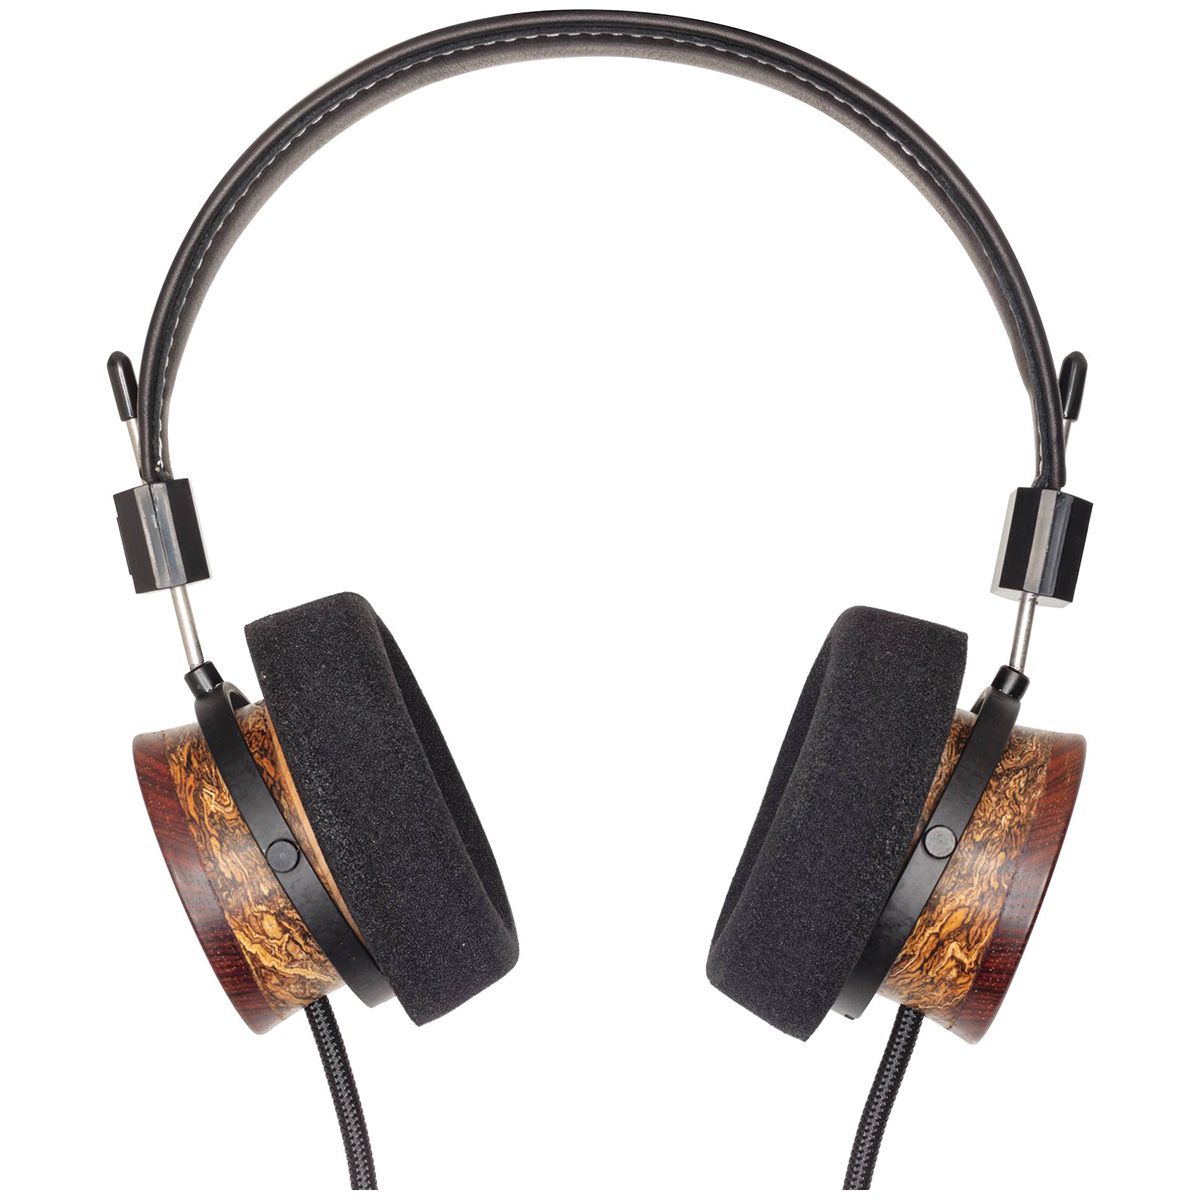 Grado RS1x Reference Series On-Ear Headphones